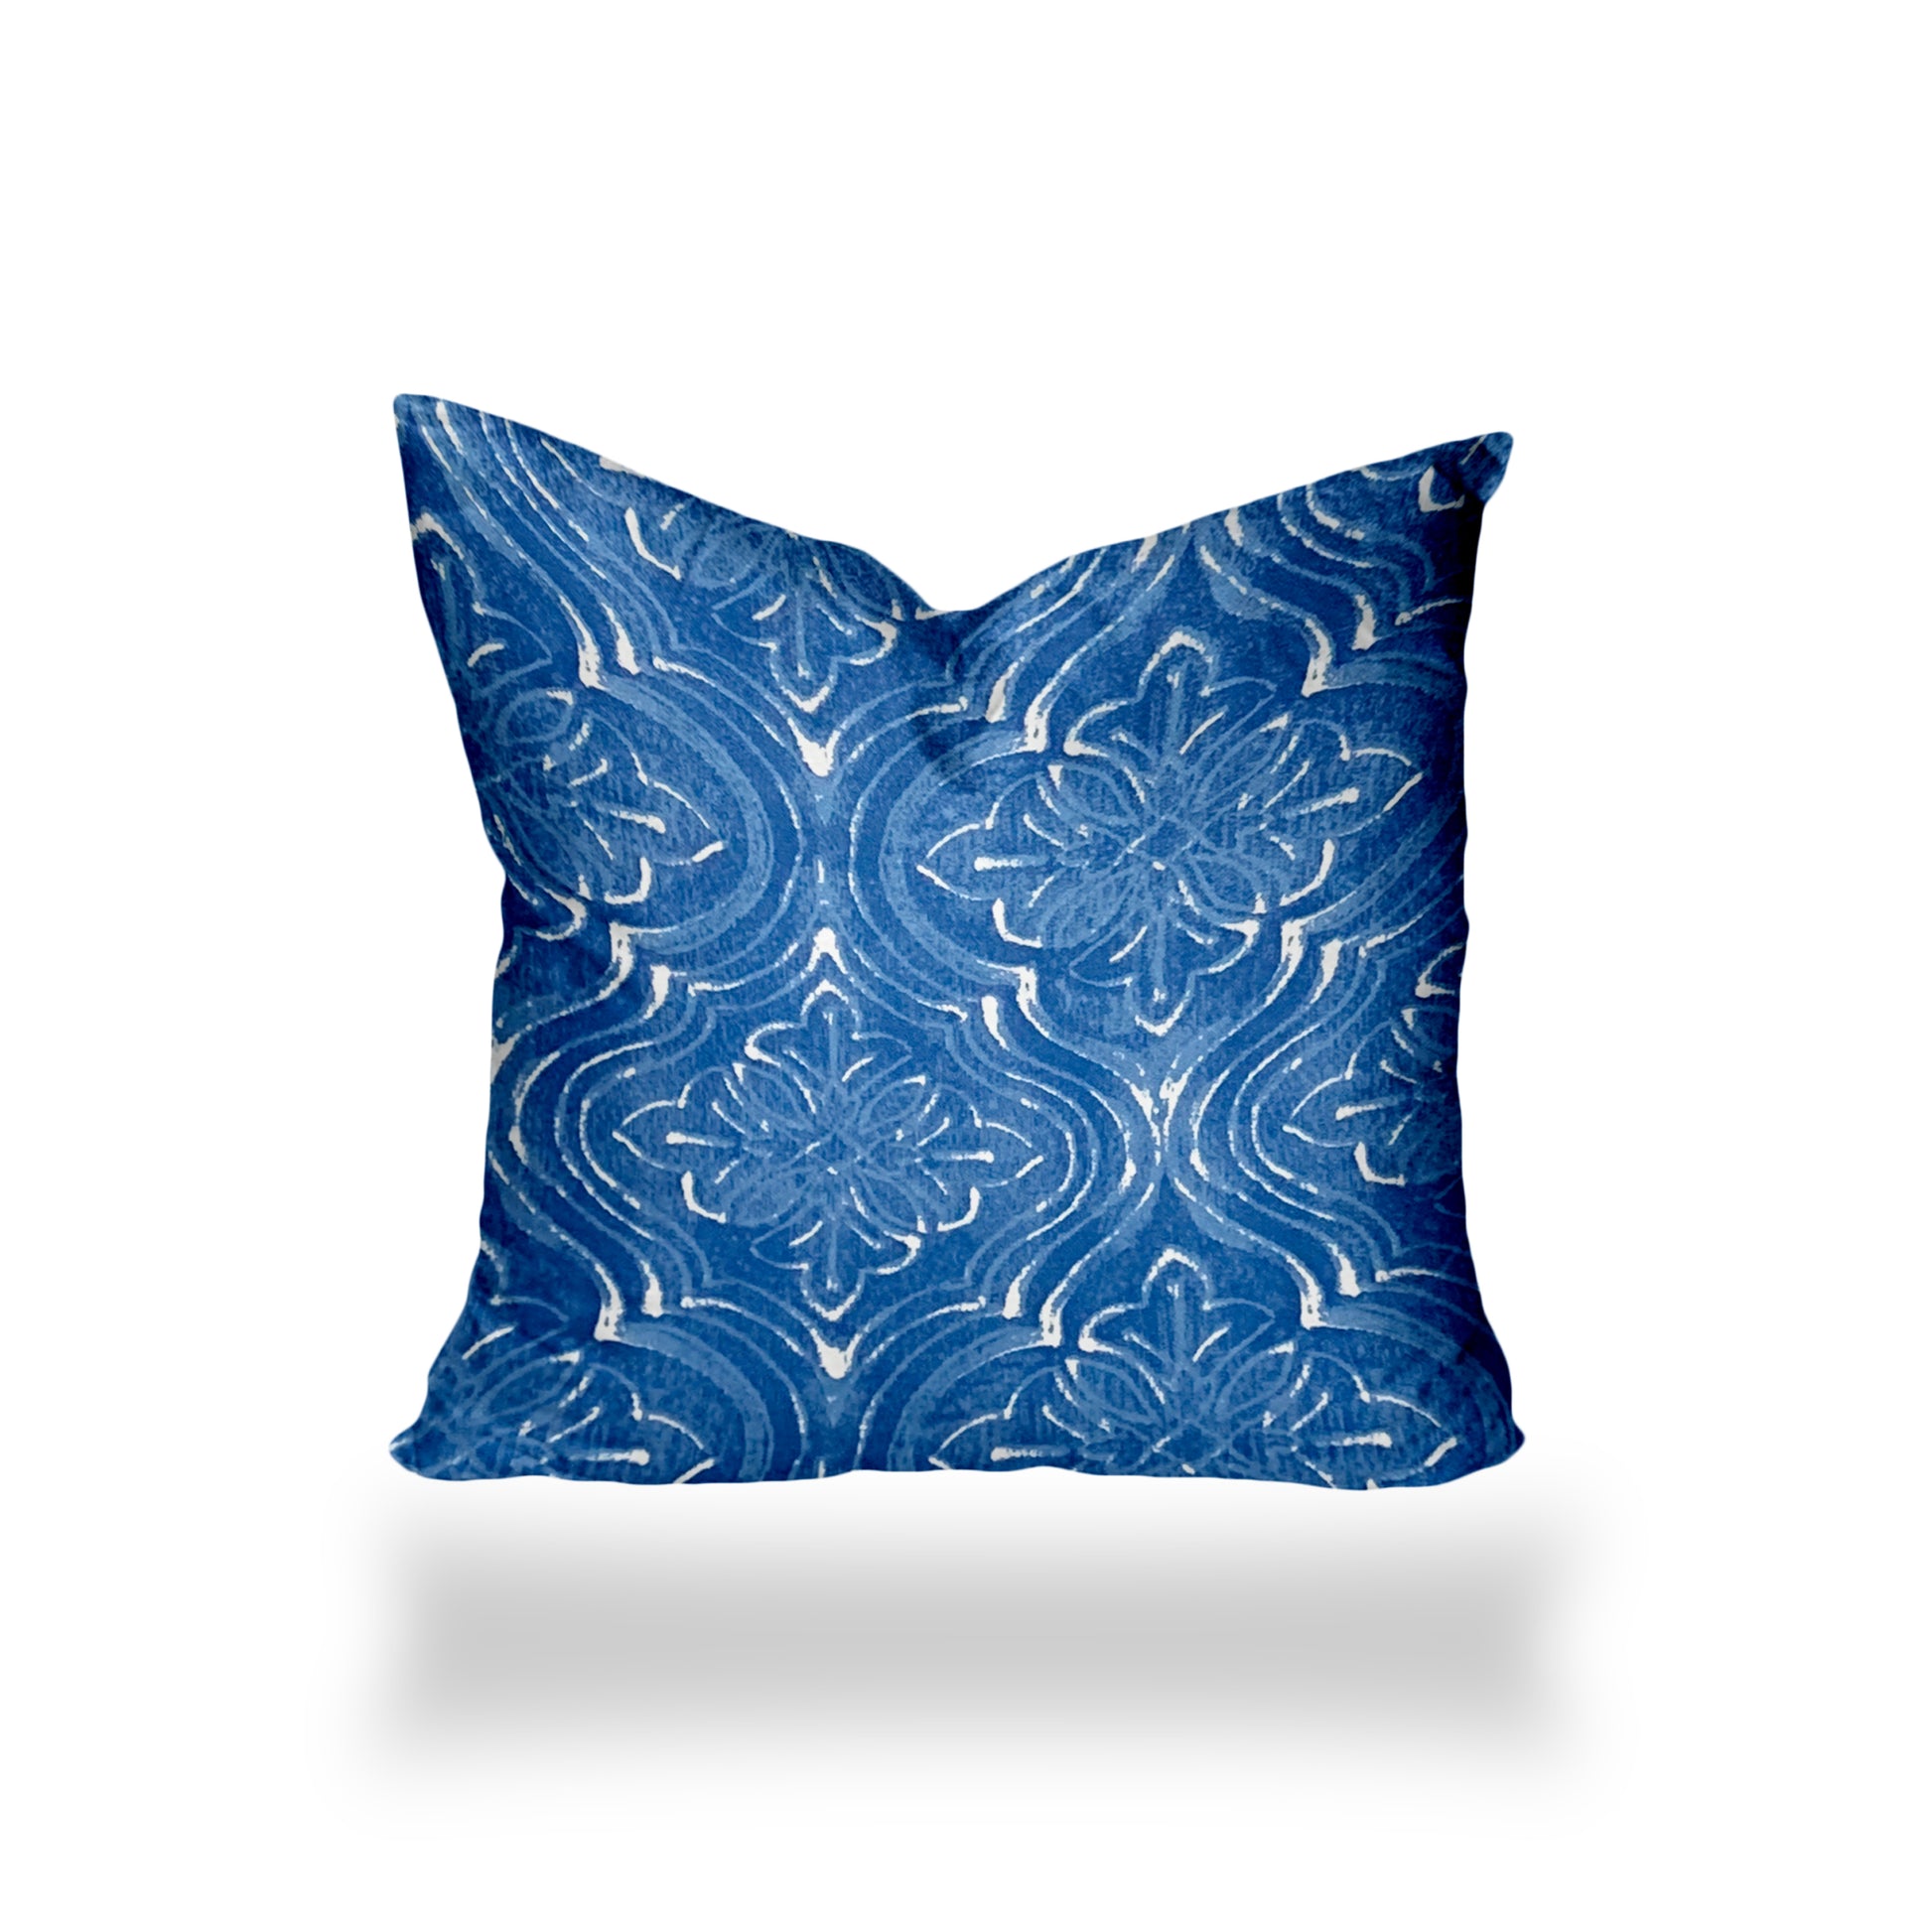 ATLAS Indoor Outdoor Soft Royal Pillow, Zipper Cover w multicolor-polyester